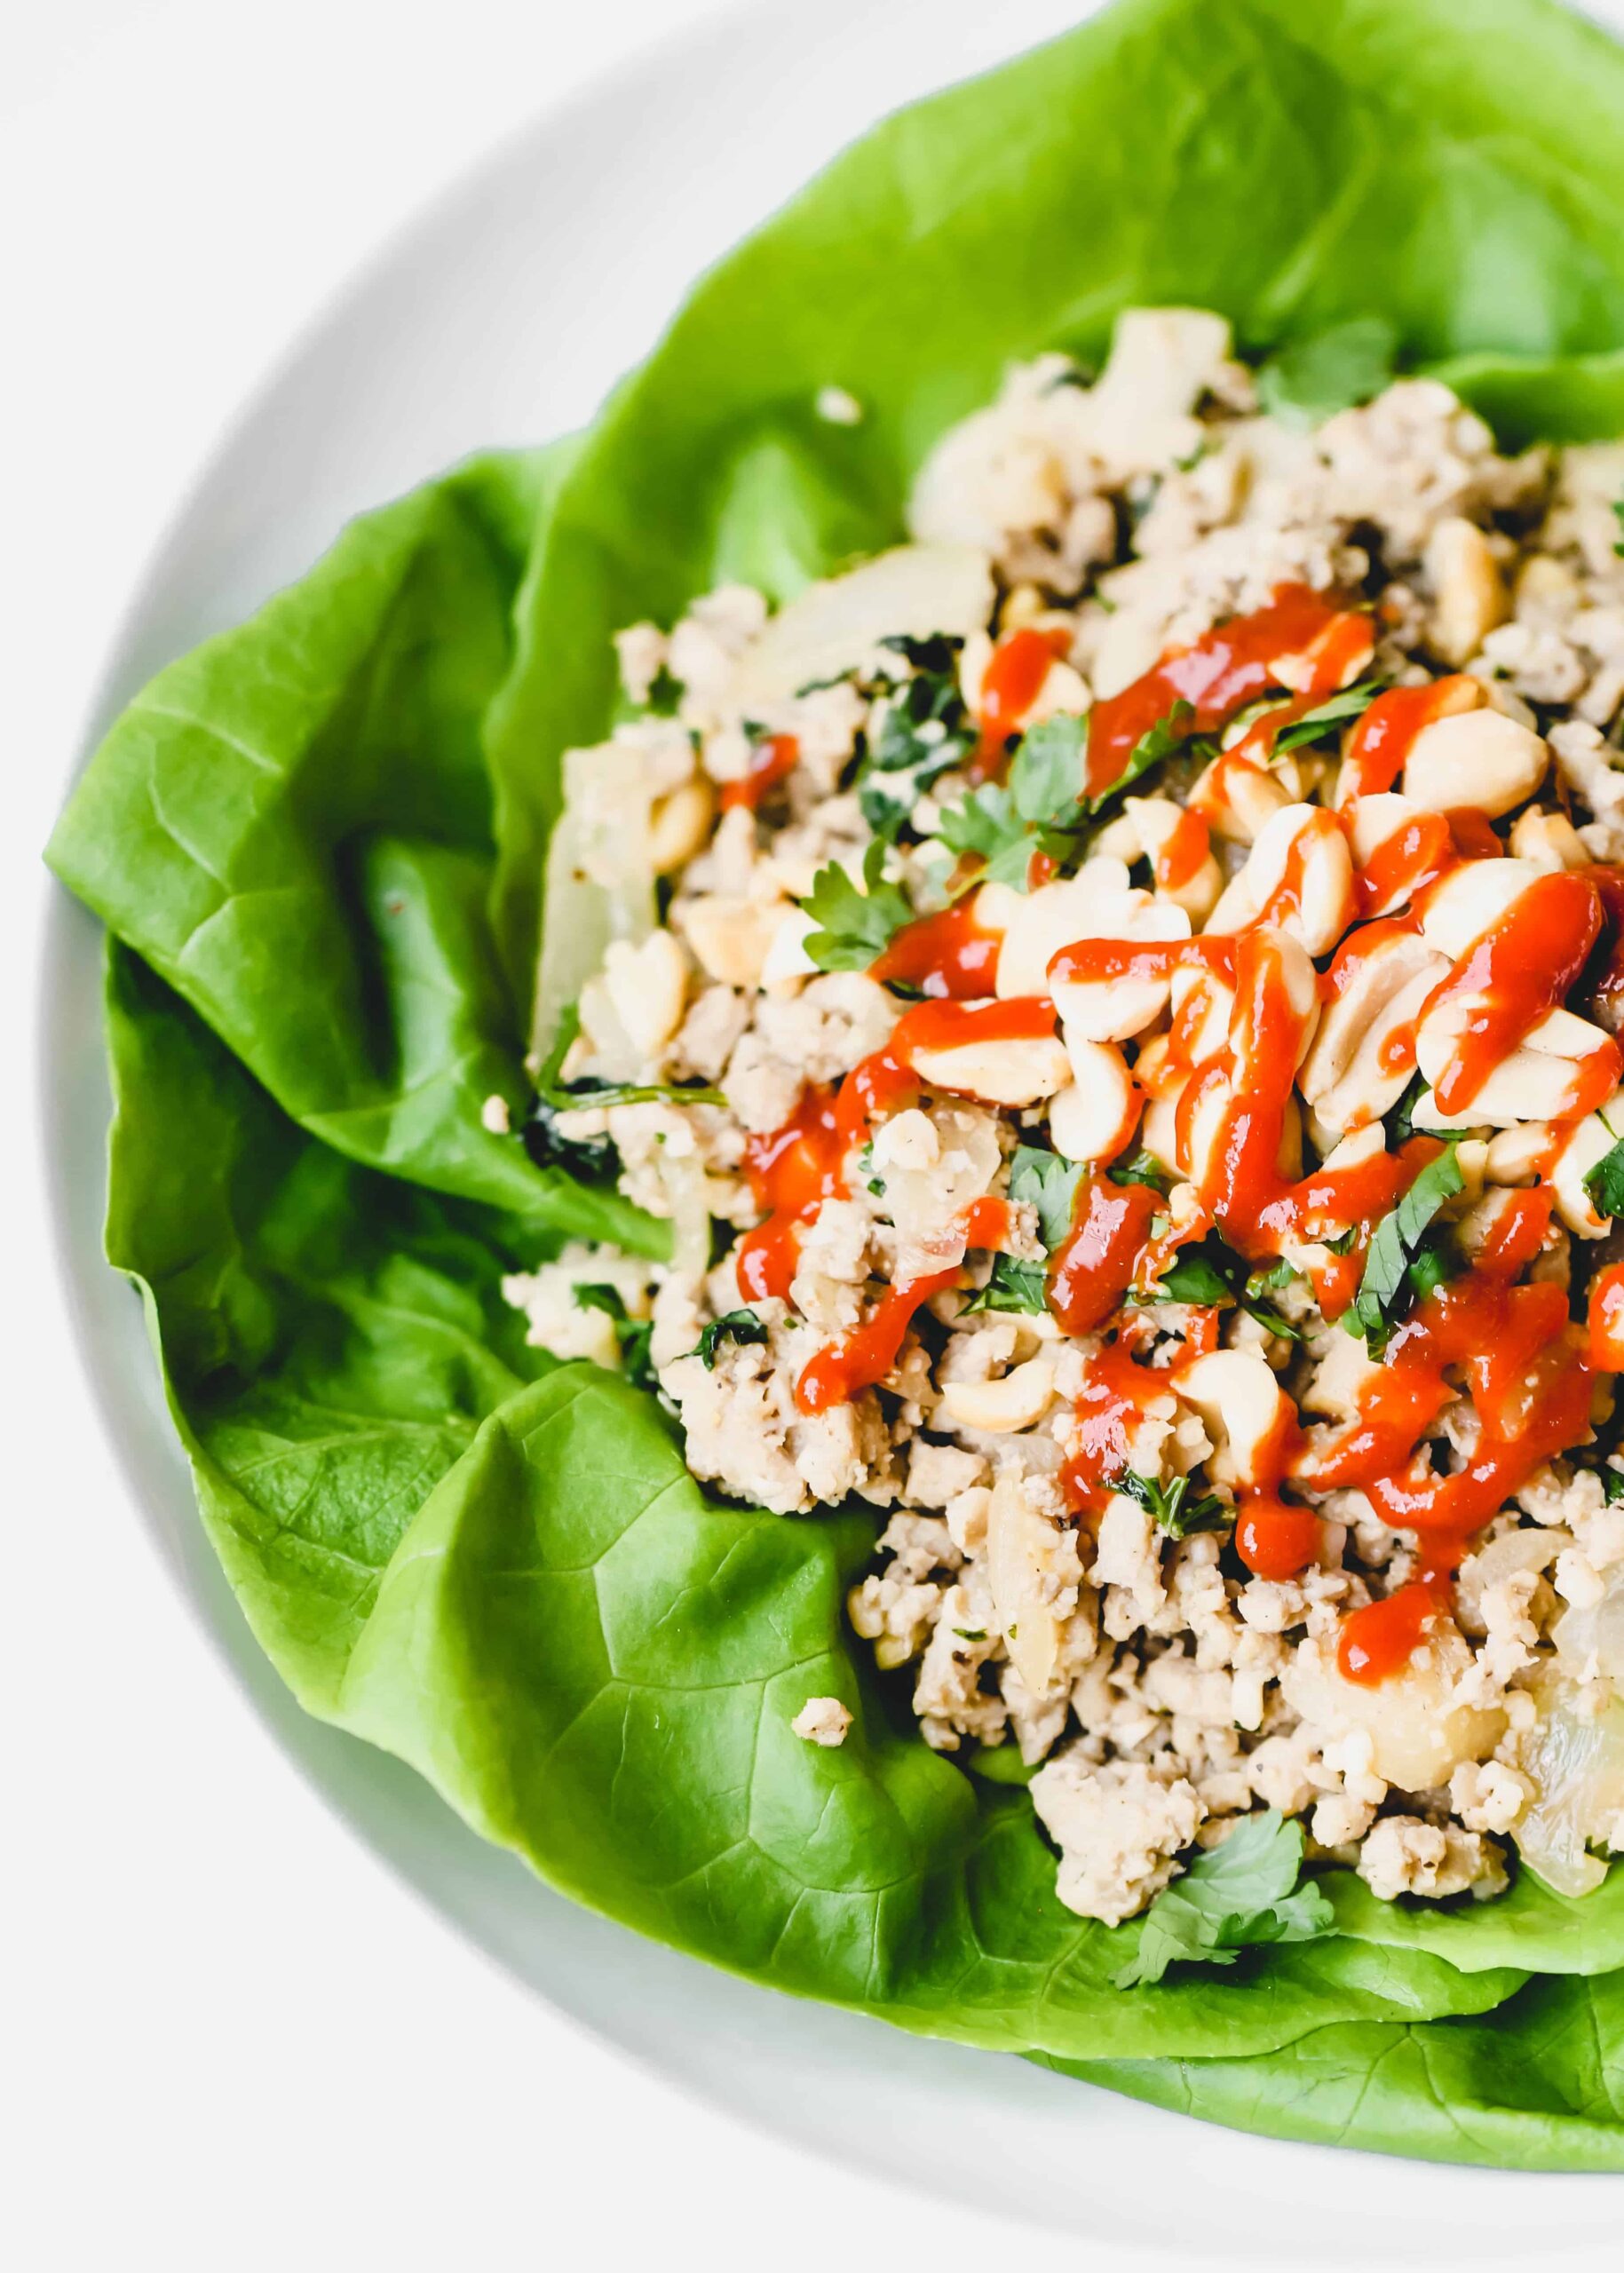 Thai Peanut Lettuce Wraps + 30 Minute Thyroid Cookbook Review @shawsimpleswaps #thyroidhealth #cookingforhealth #Paleo